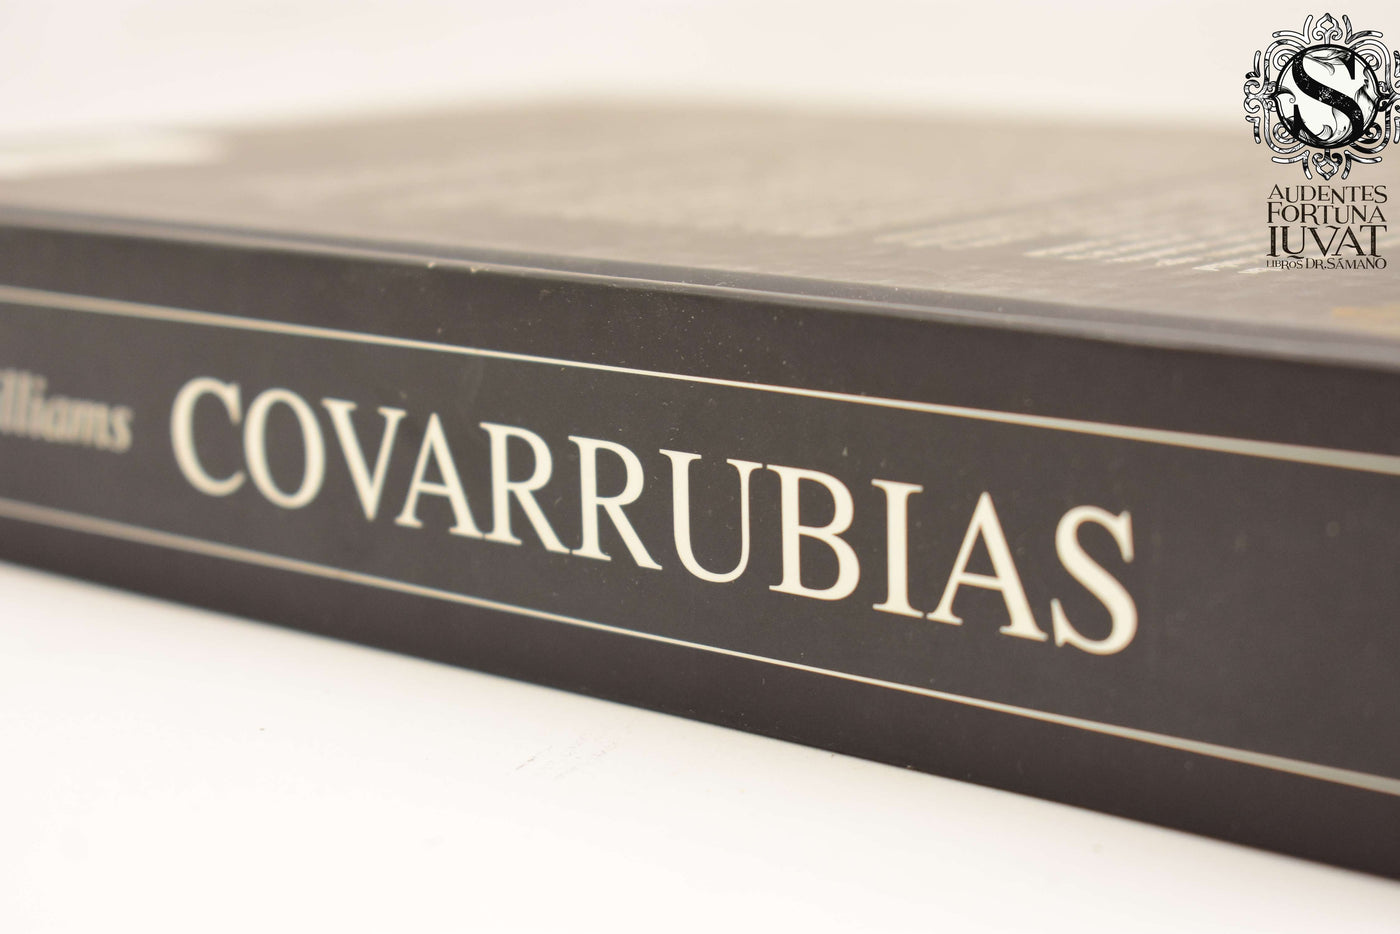 COVARRUBIAS - Adriana Williams